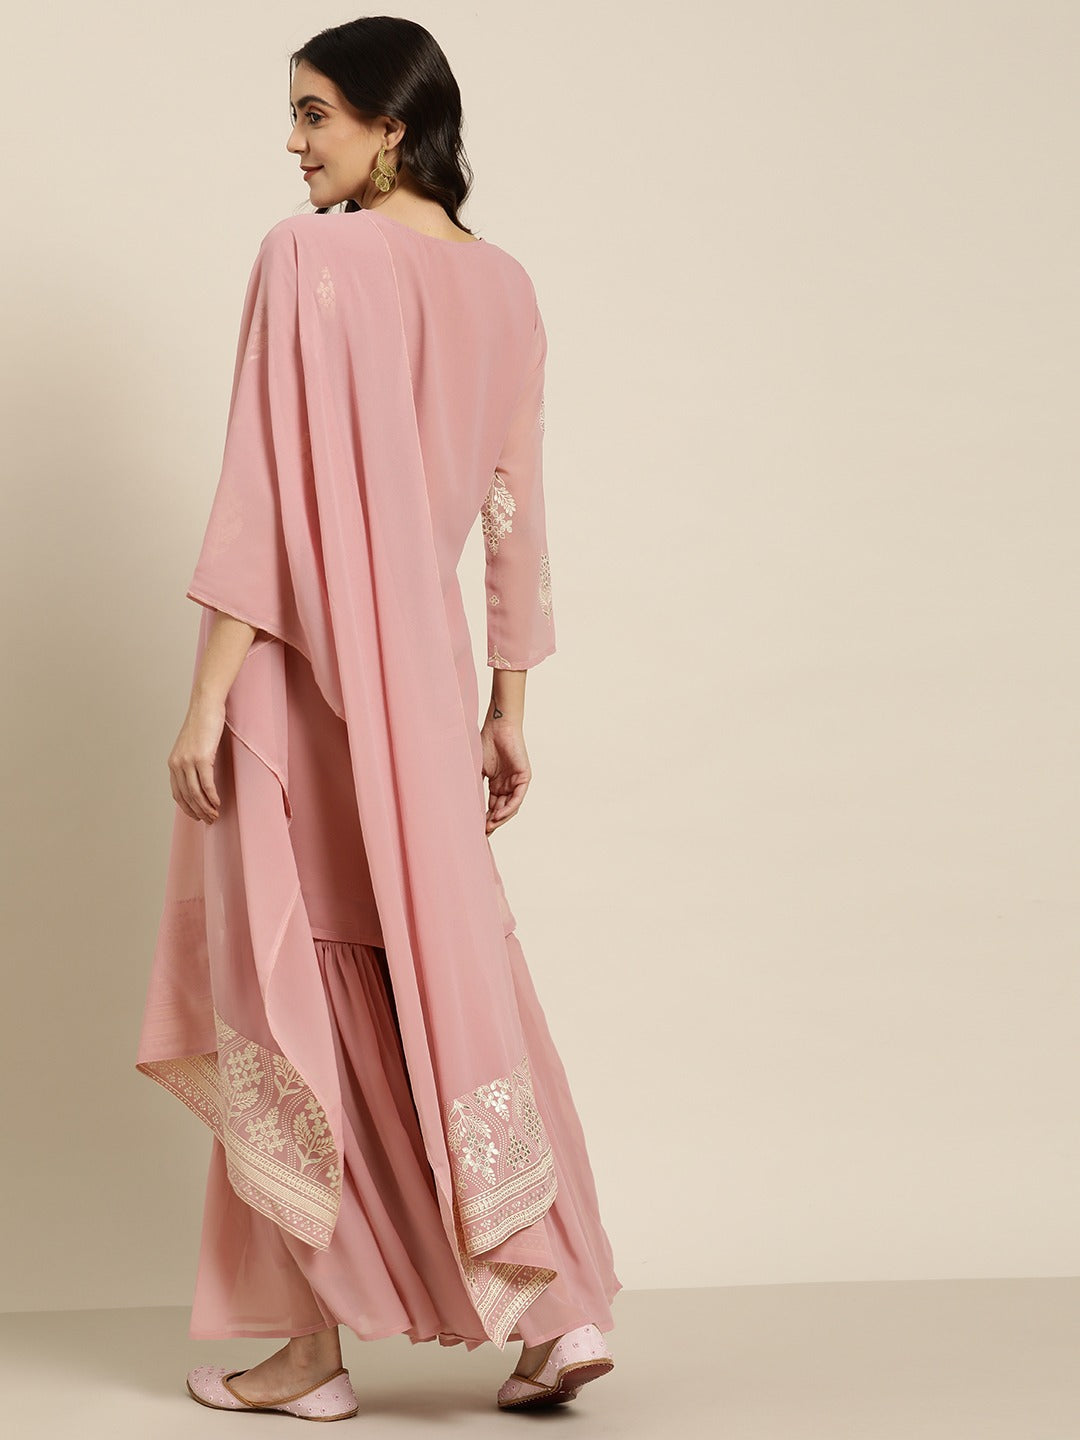 Women's Pink & Silver Ethnic Motifs Foil Printed Straight Kurta Sharara Dupatta ( JOKPS D32P 1444 Pink ) - Jompers